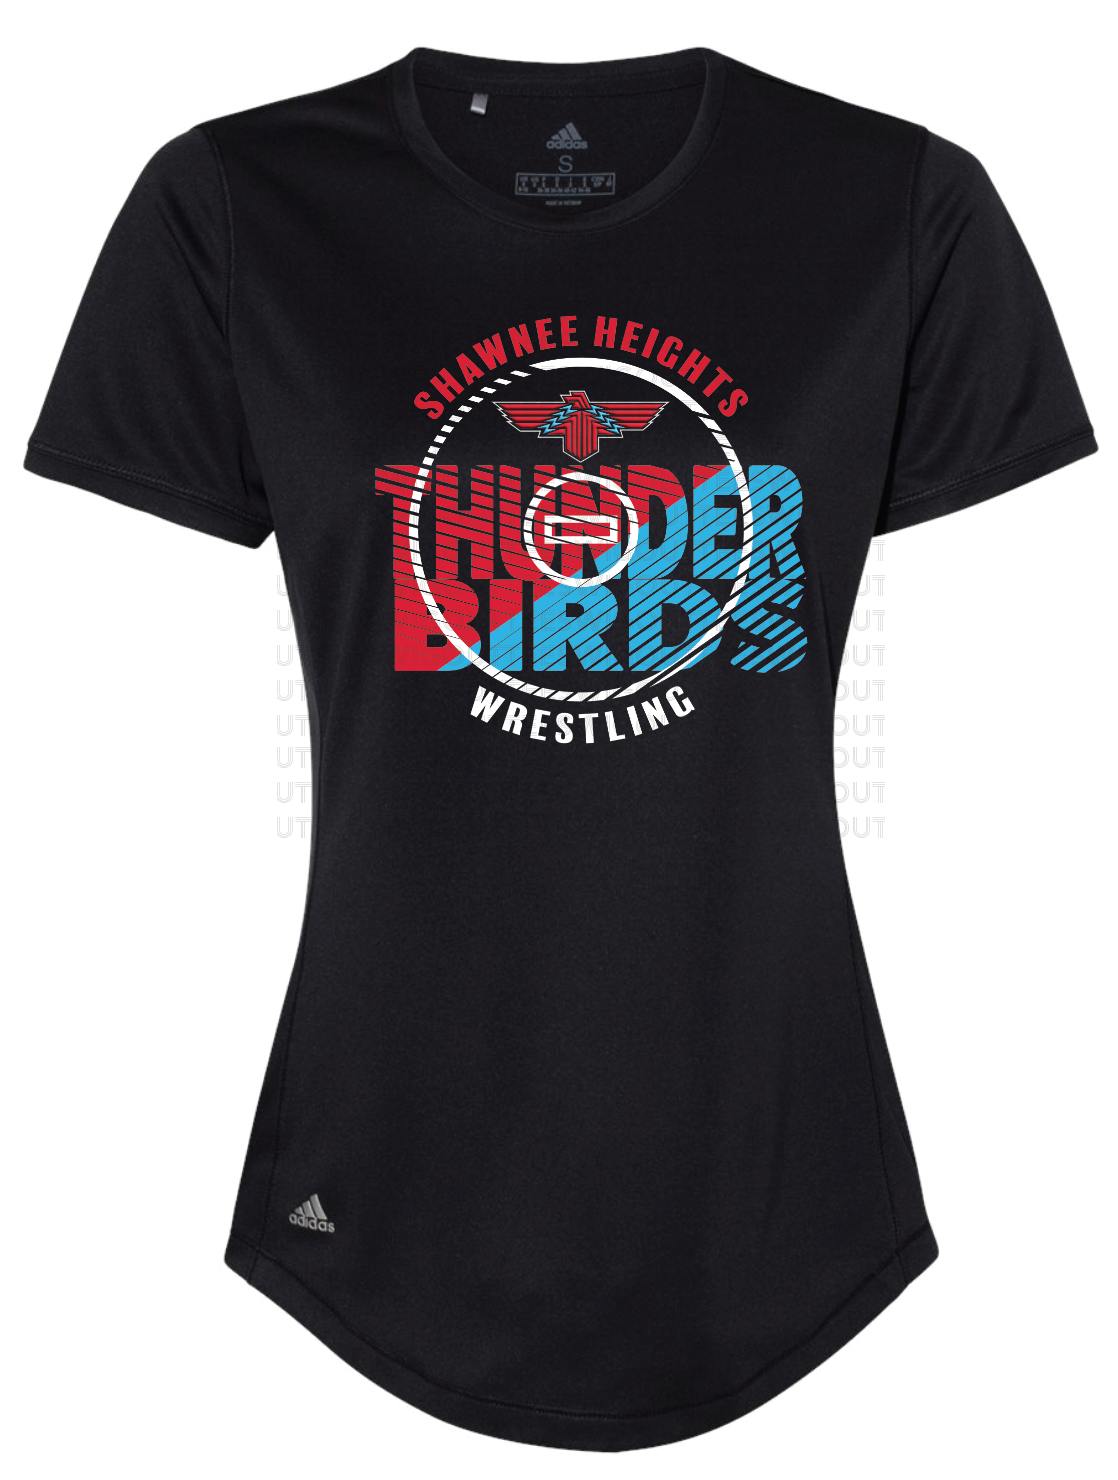 Shawnee Heights Wrestling Adidas Womens Sports T-shirt